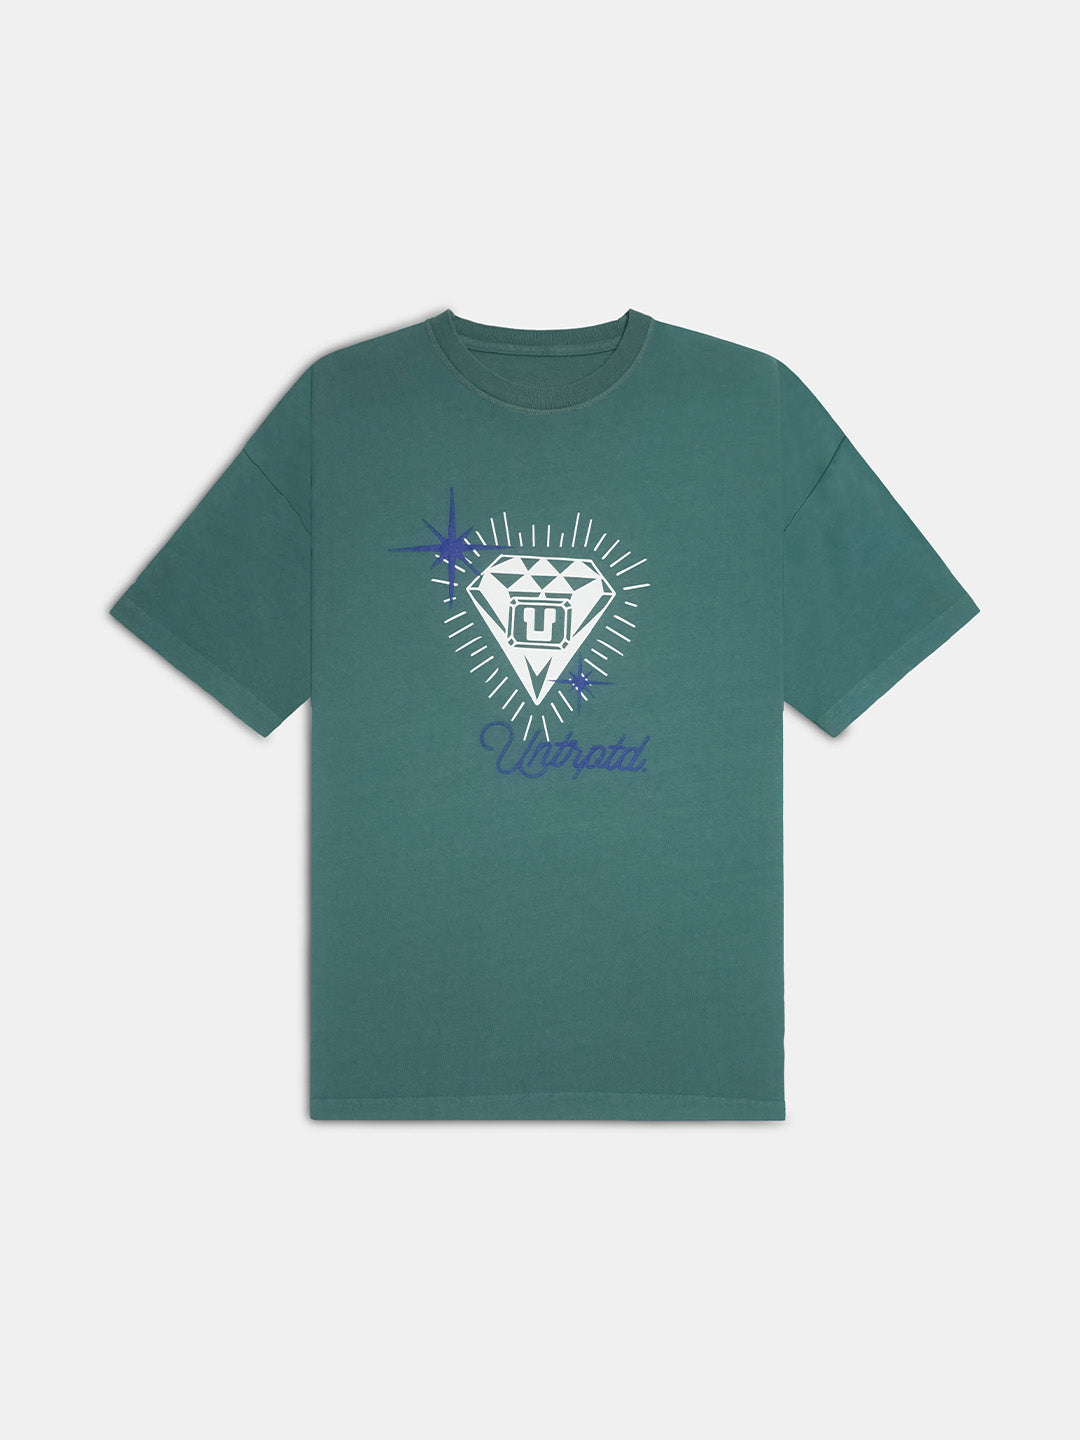 300 Club Diamond Graphic Tee Emerald Green - Front